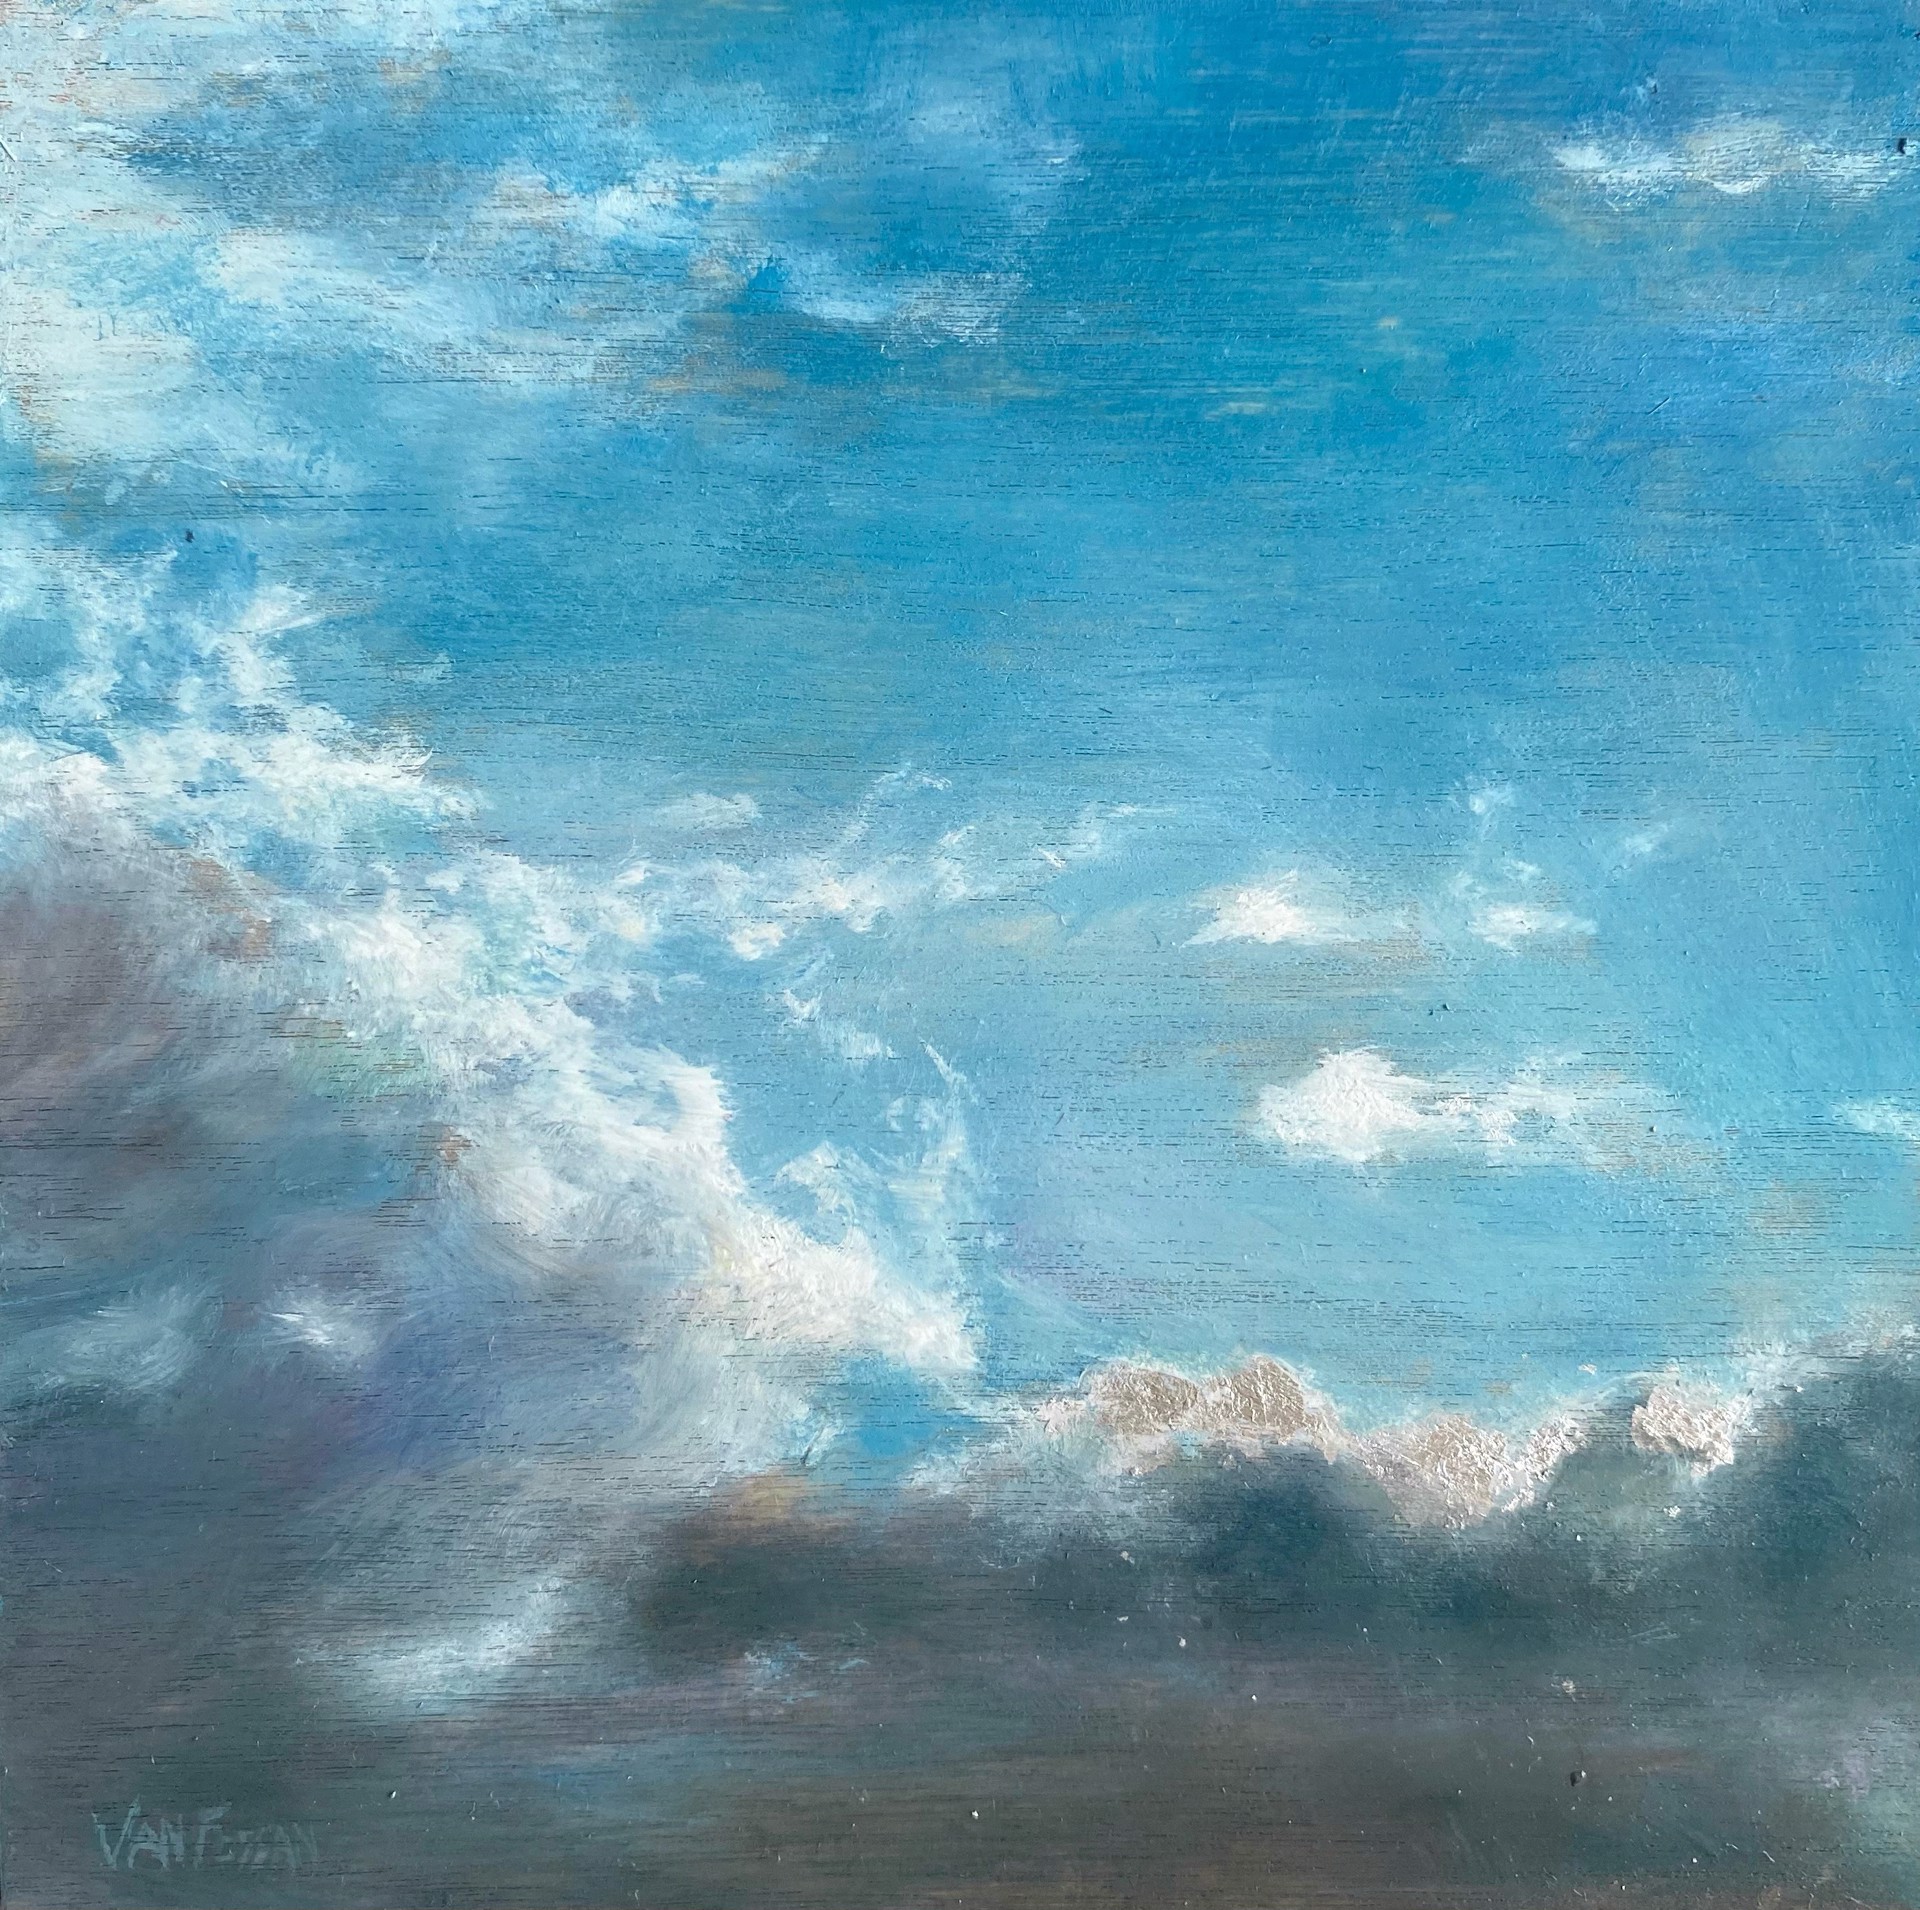 Sky 55 (diptych) by James Van Fossan